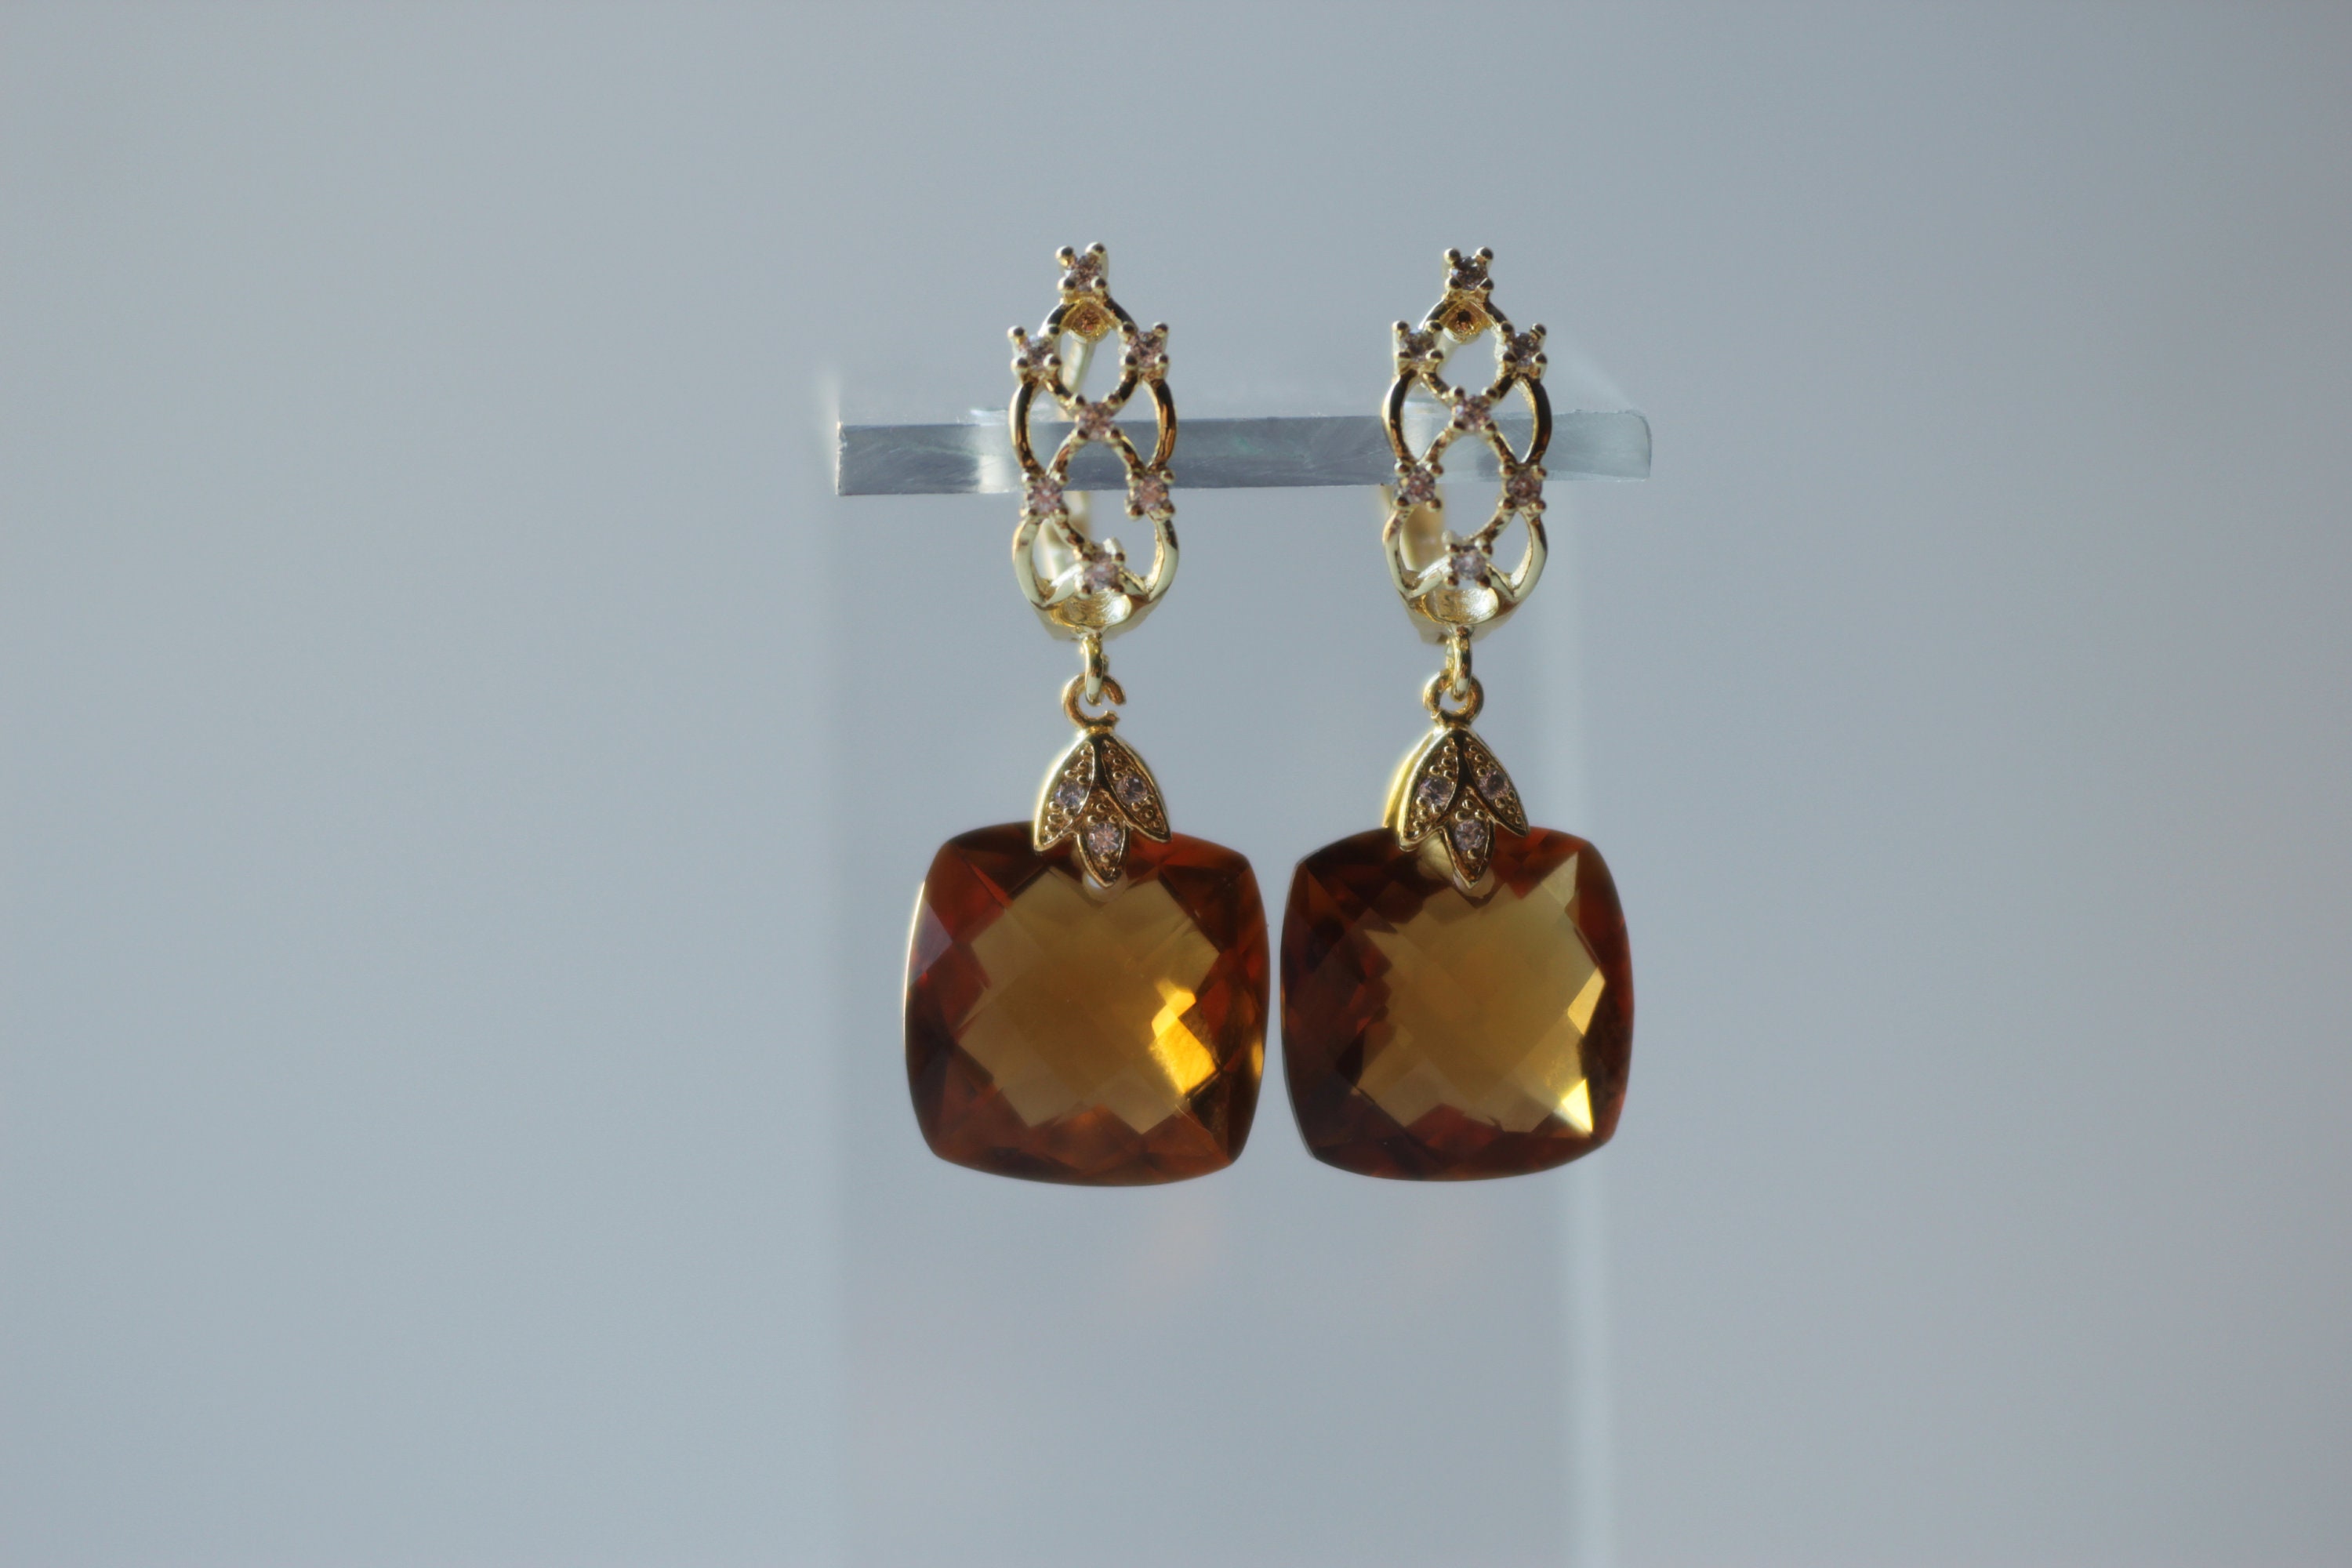 Women's jewelry earrings gold ornament elite accessories | Etsy